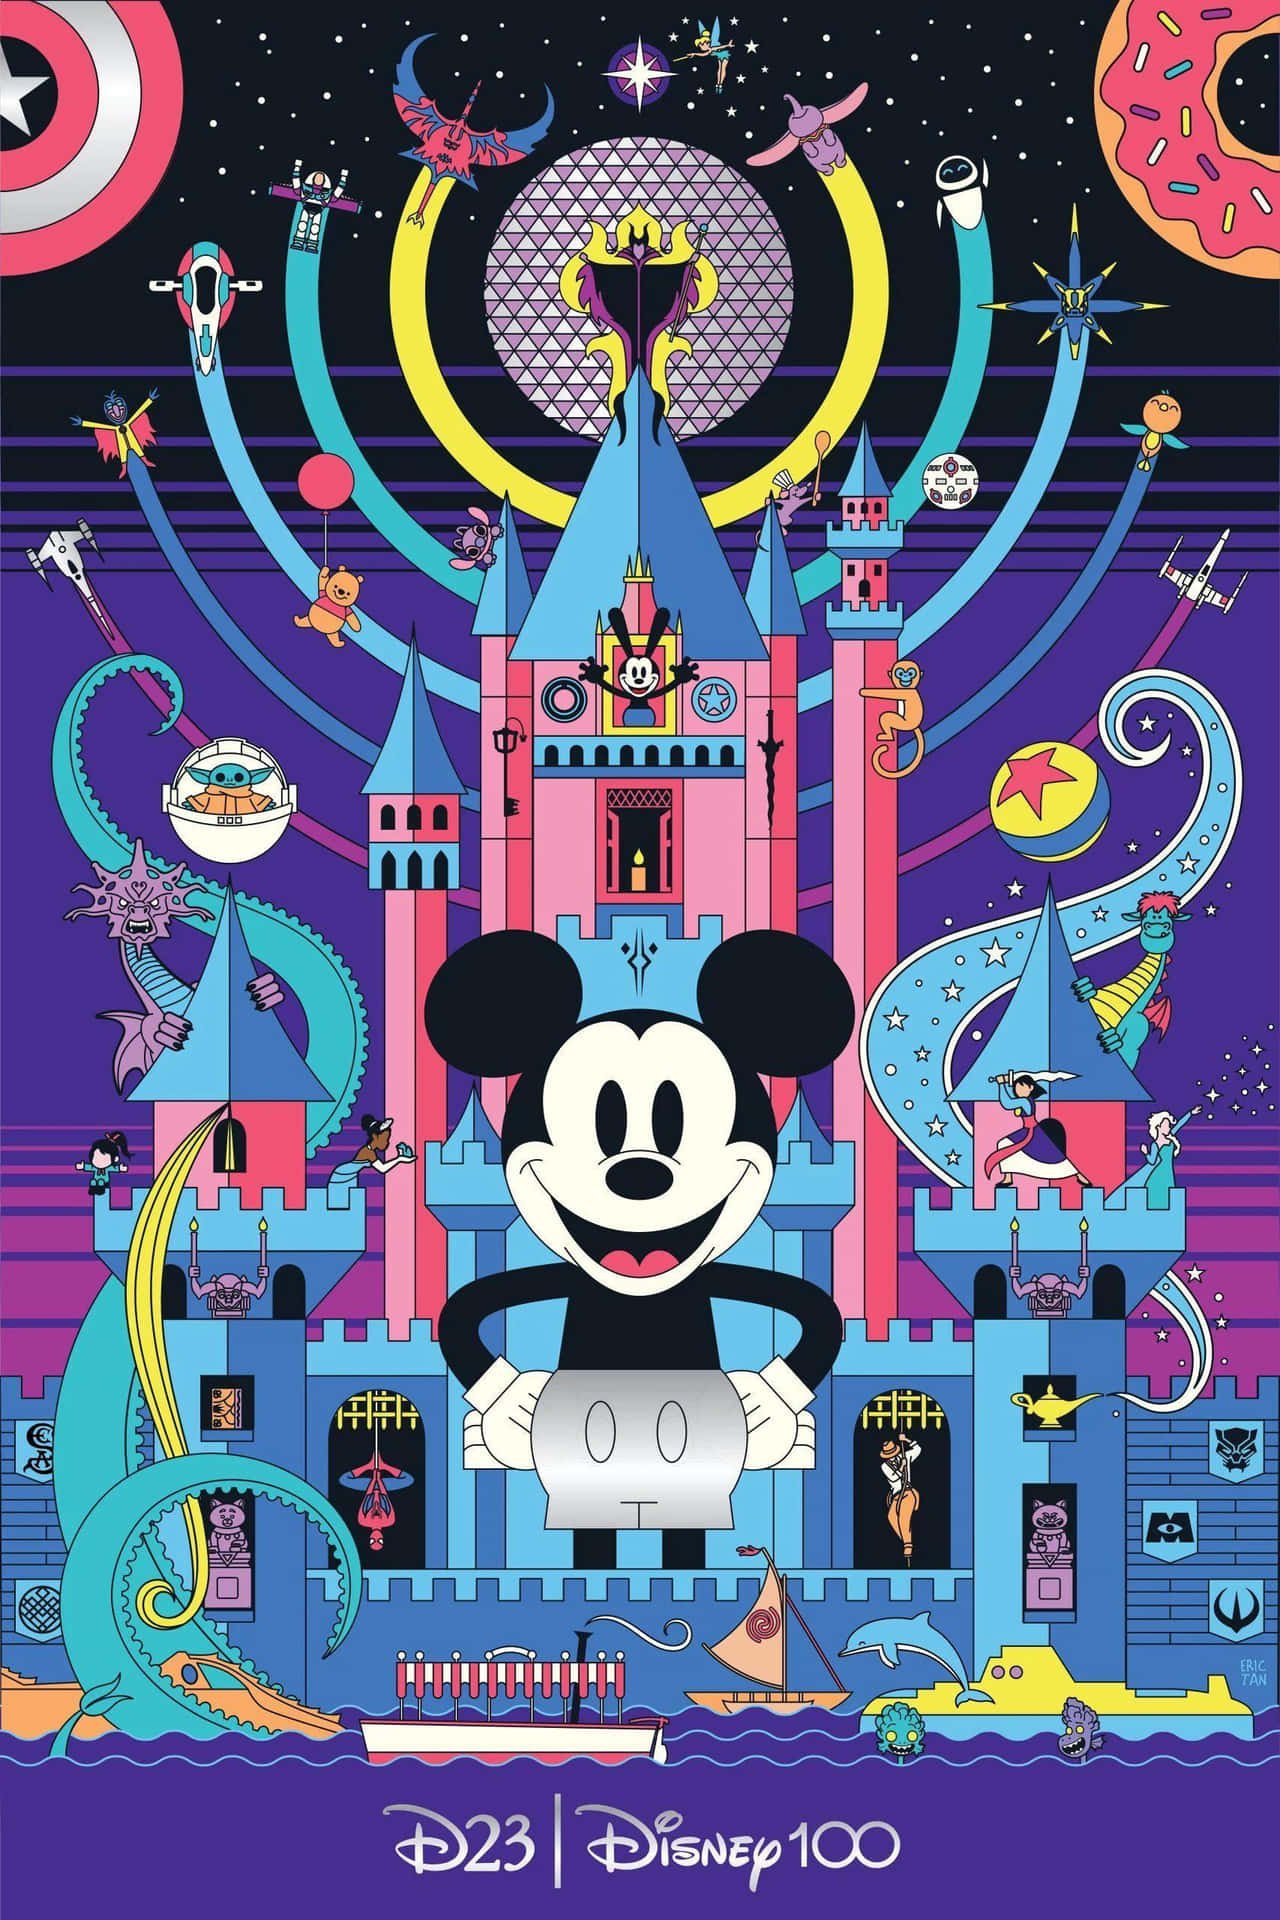 Disney100 Celebration Artwork Wallpaper